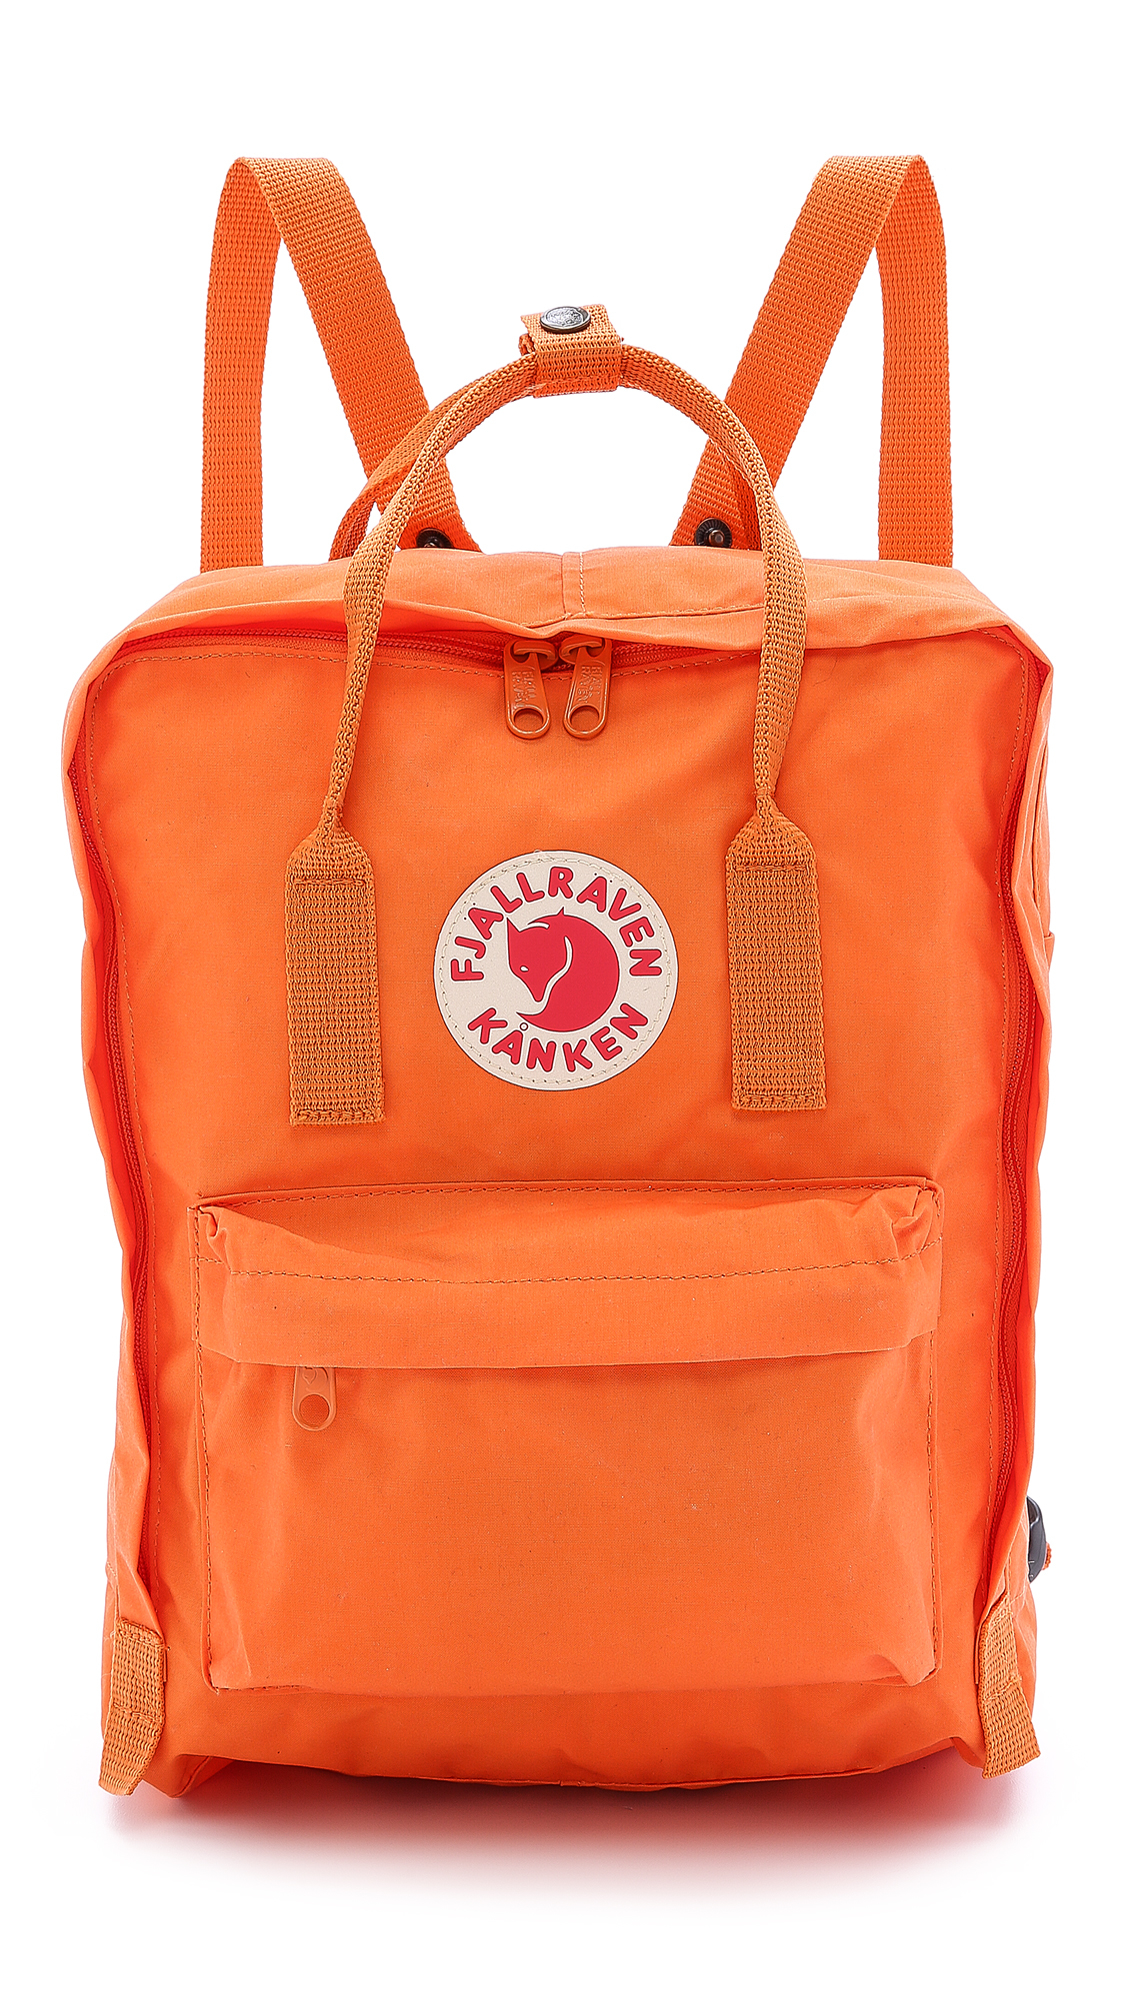 Lyst - Fjallraven Kanken Backpack in Orange for Men